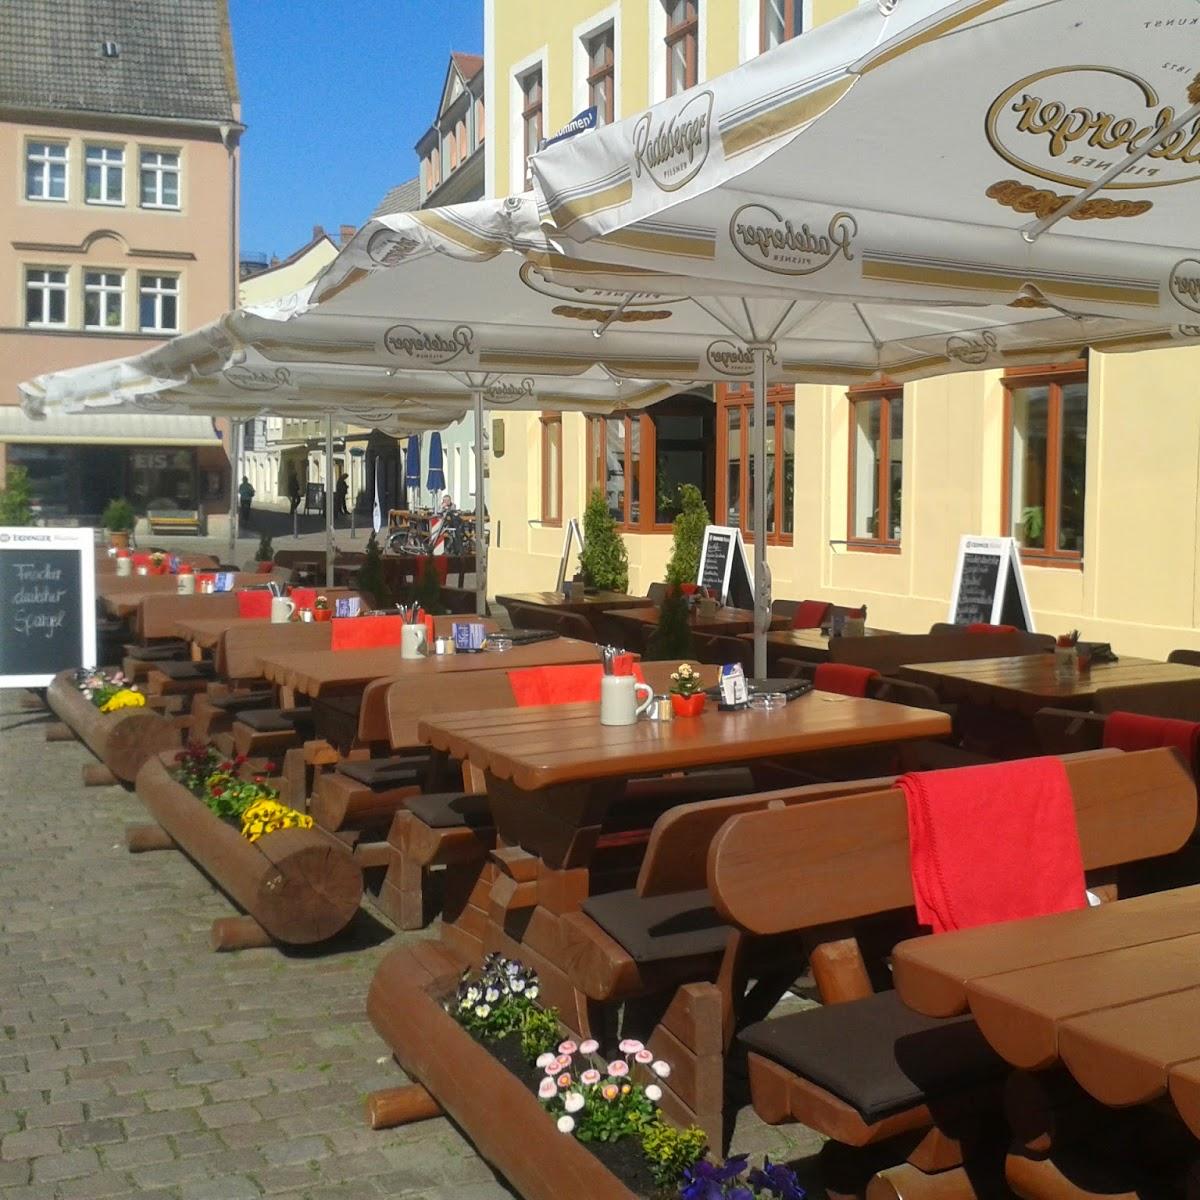 Restaurant "Ratsherrenstuben" in Pirna